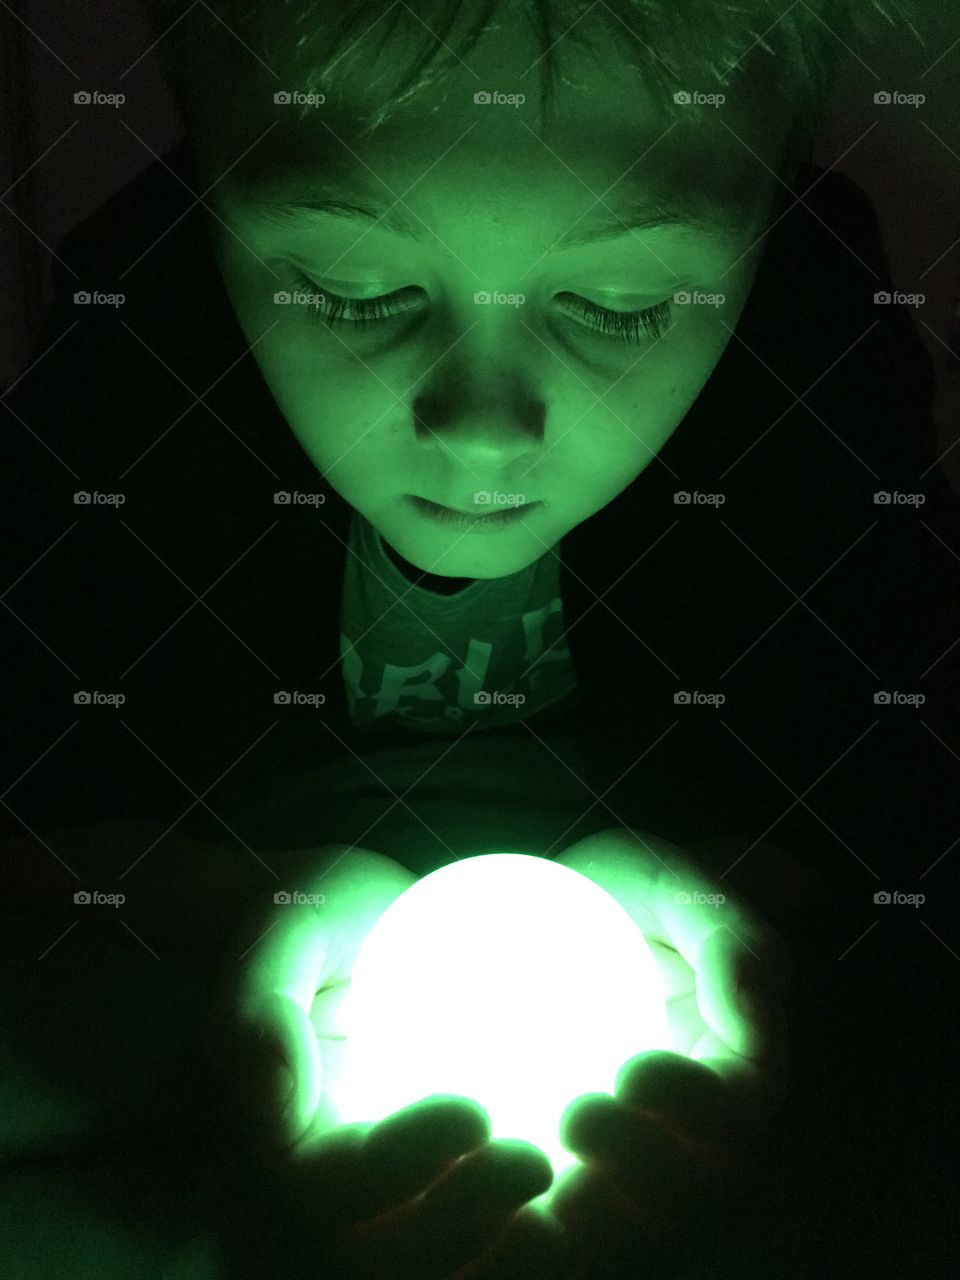 Boy looking at green glow ball